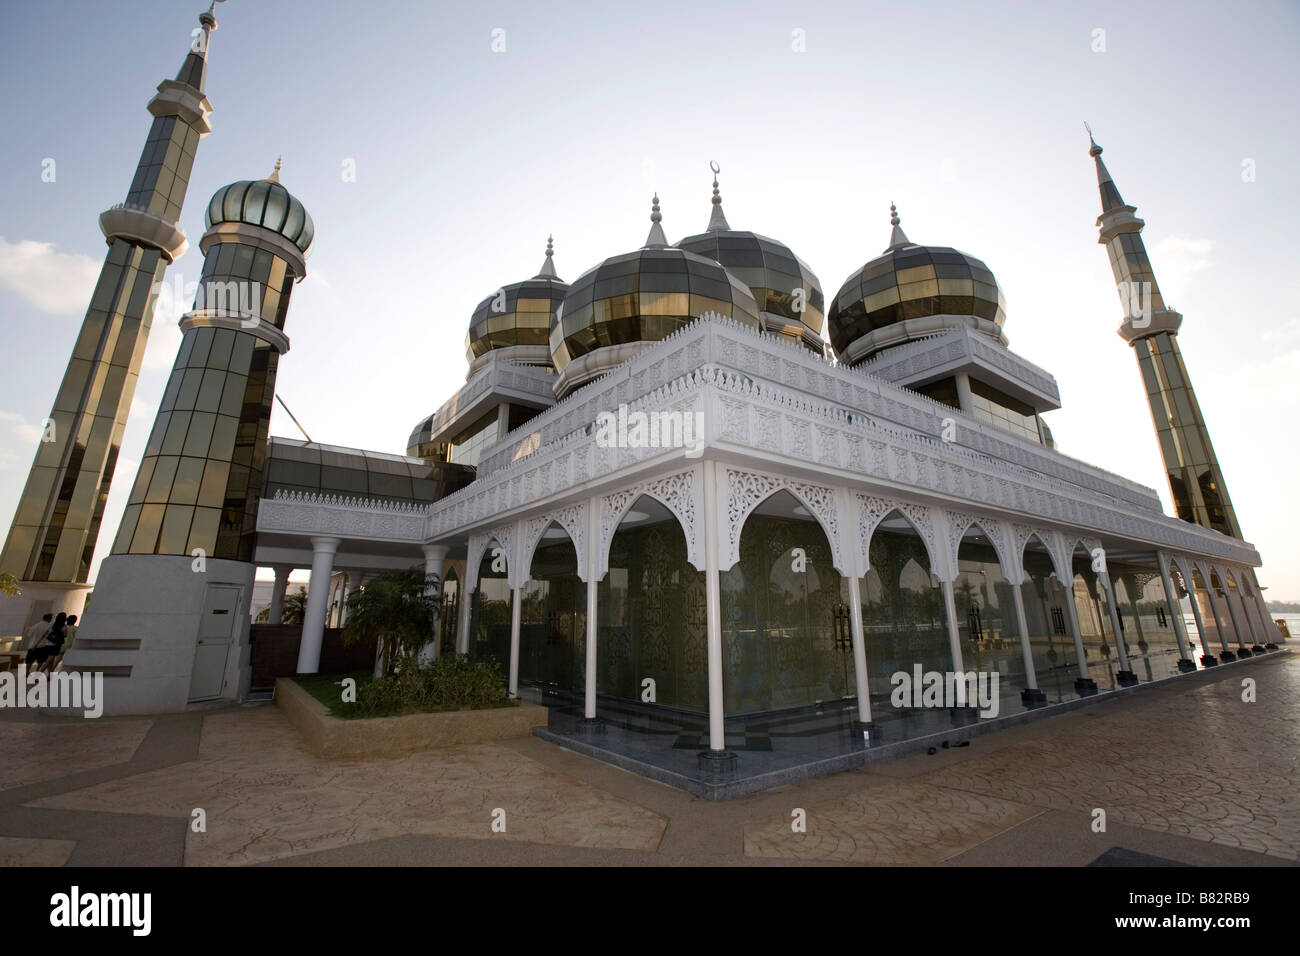 Crystal Mosque or Masjid Kristal, Terengganu, Malaysia Stock Photo